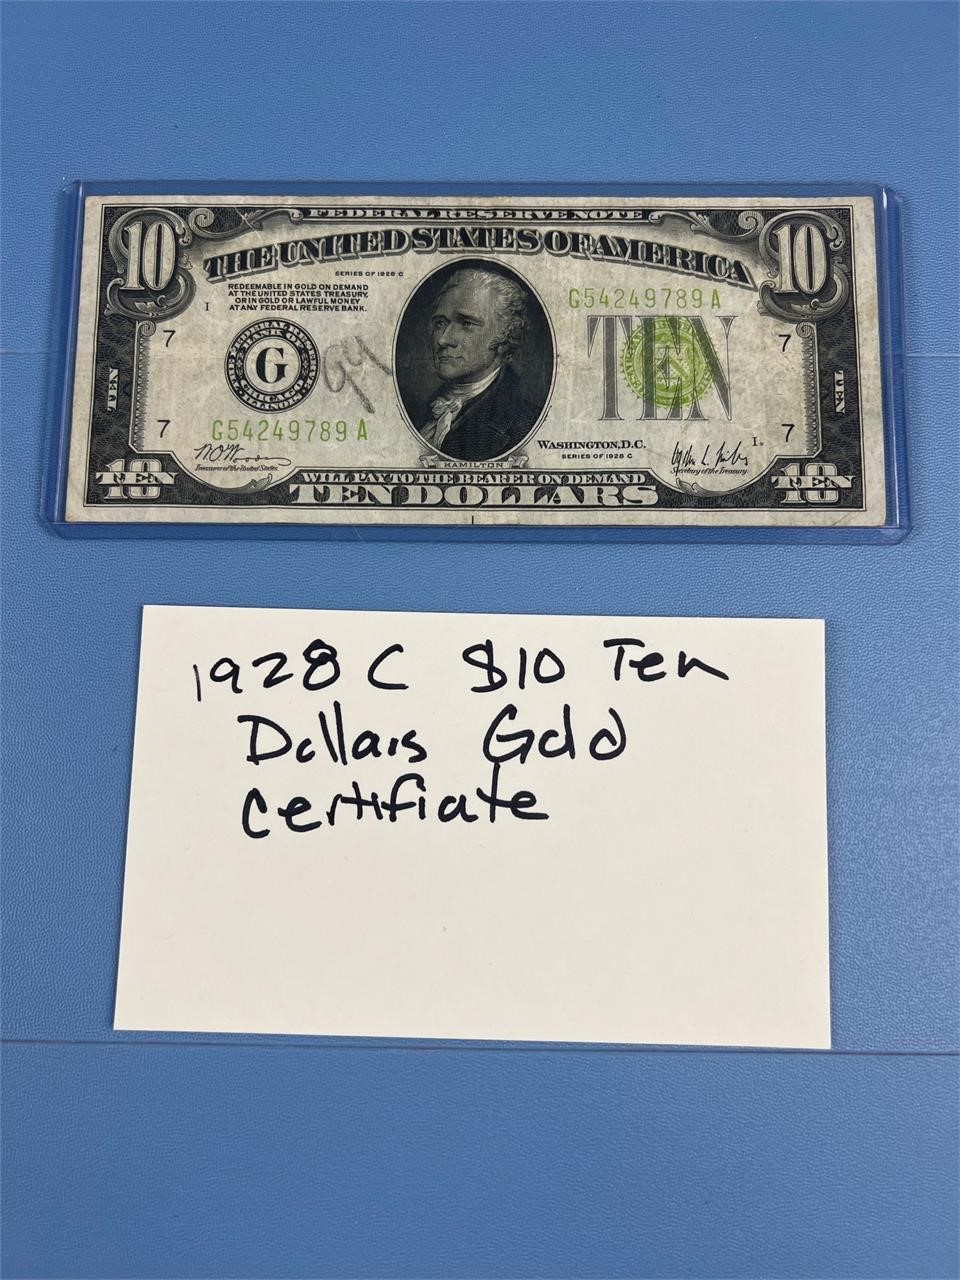 1928 C $10 DOLLAR GOLD CERTIFICATE